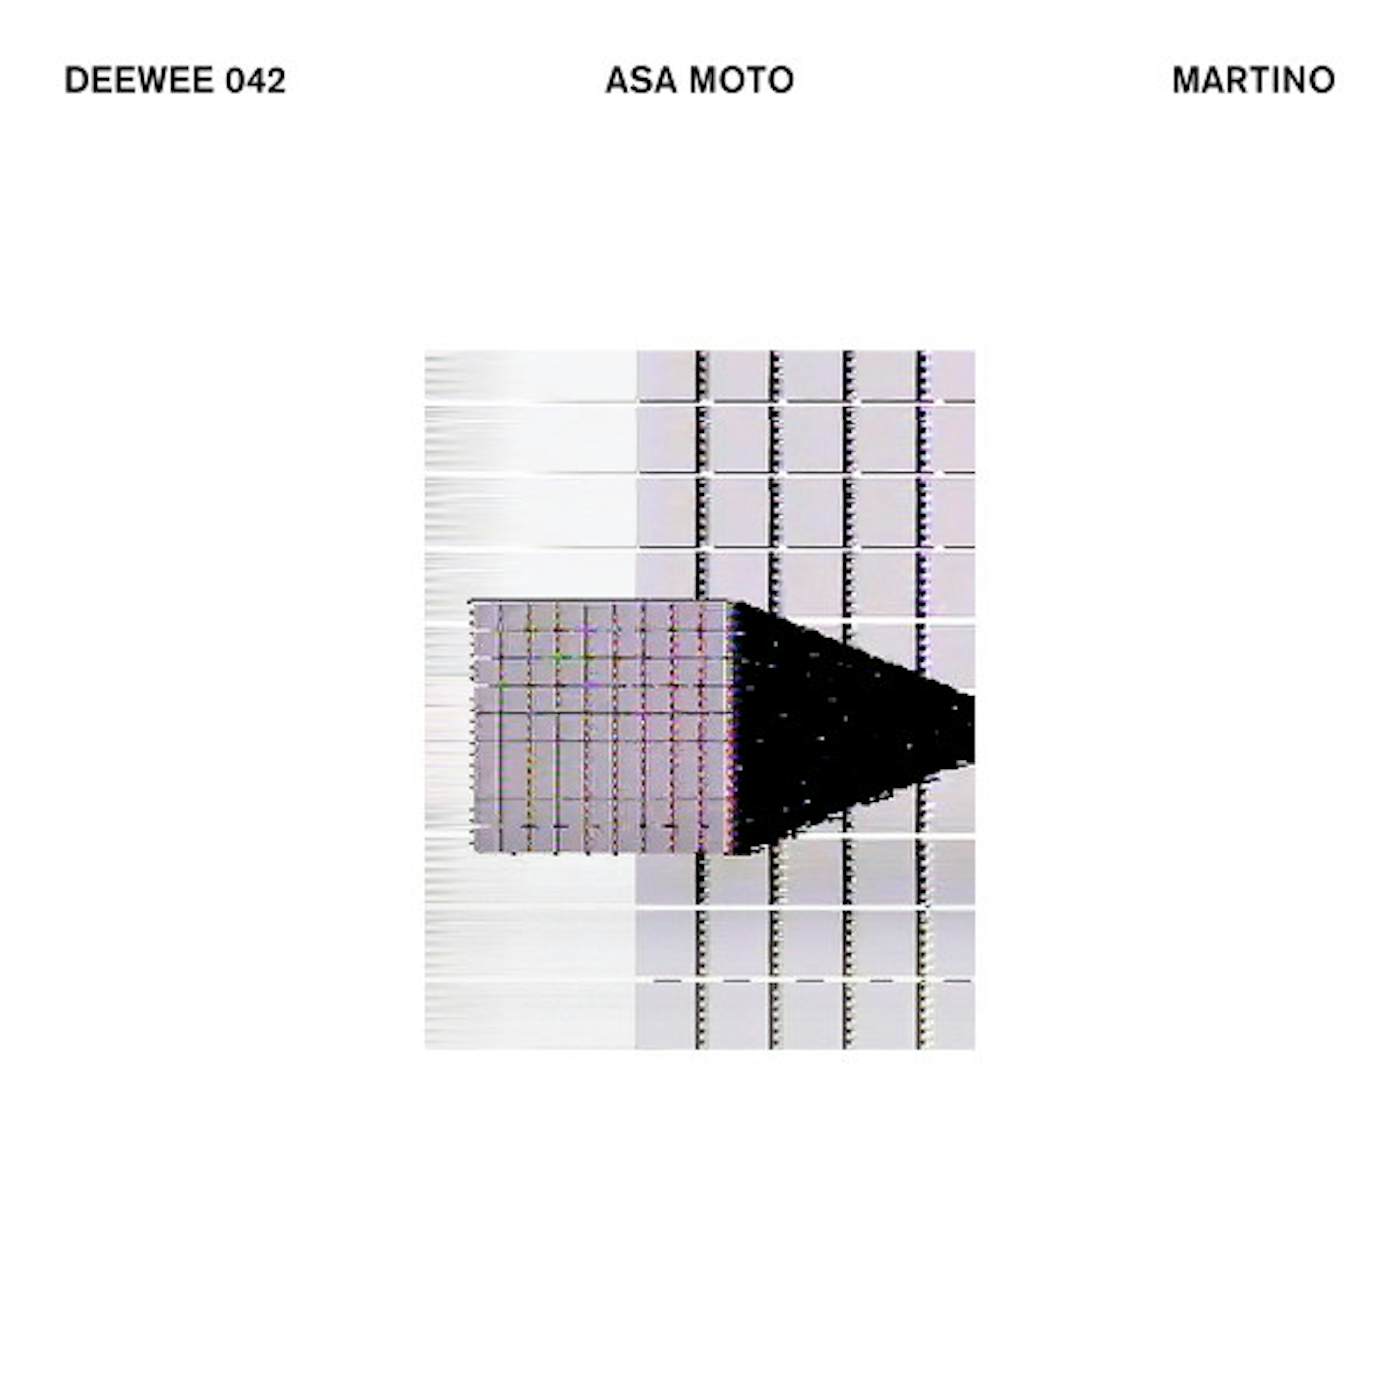 ASA MOTO Martino Vinyl Record